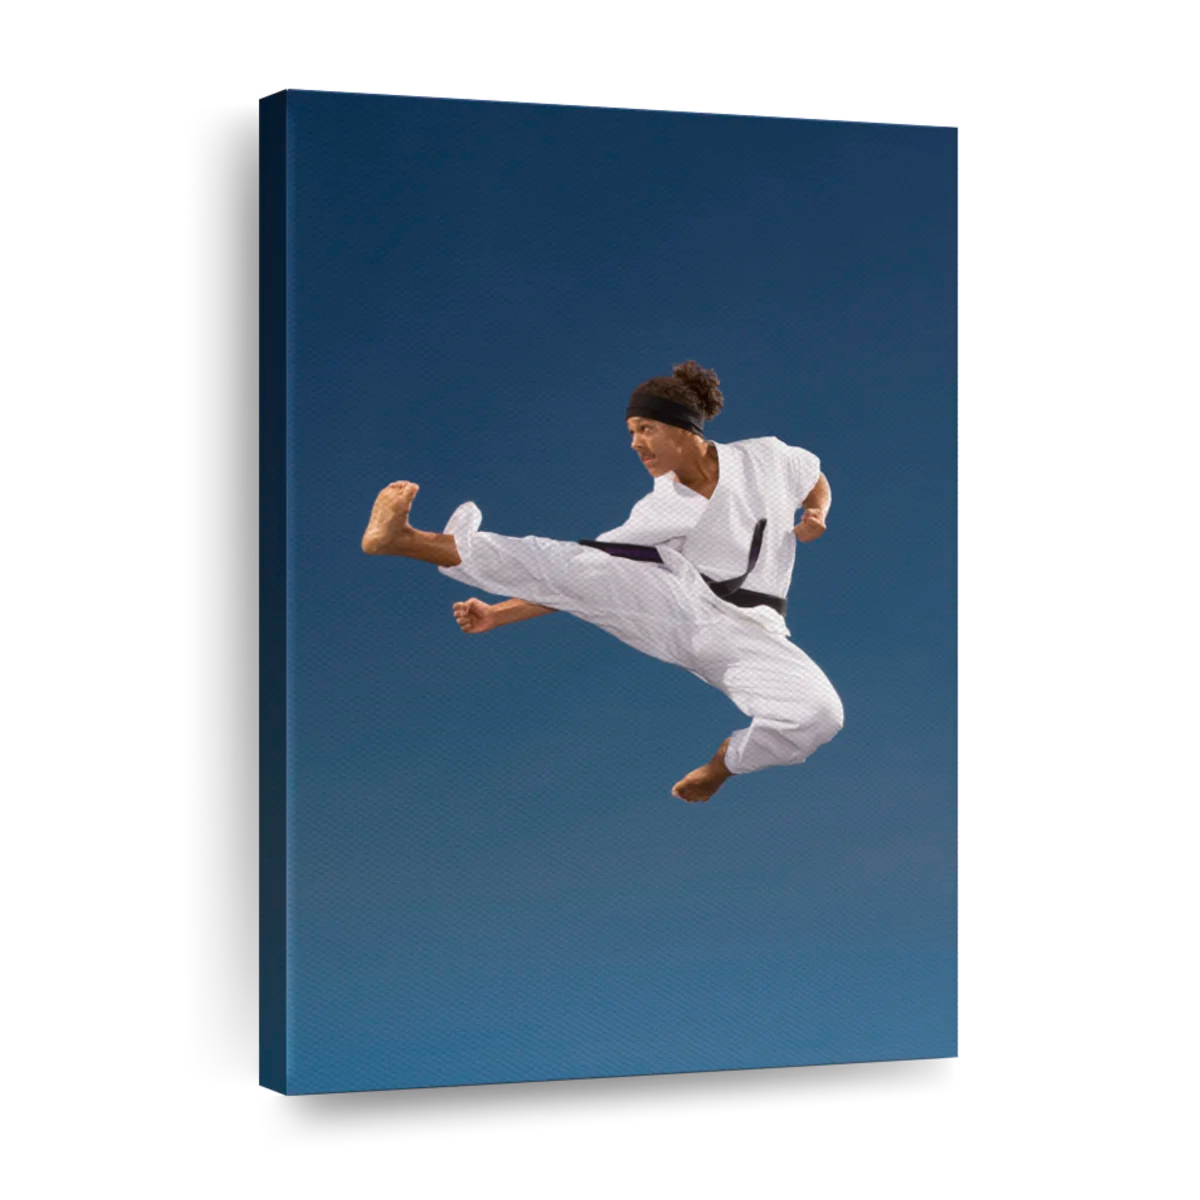 taekwondo kicks wallpaper